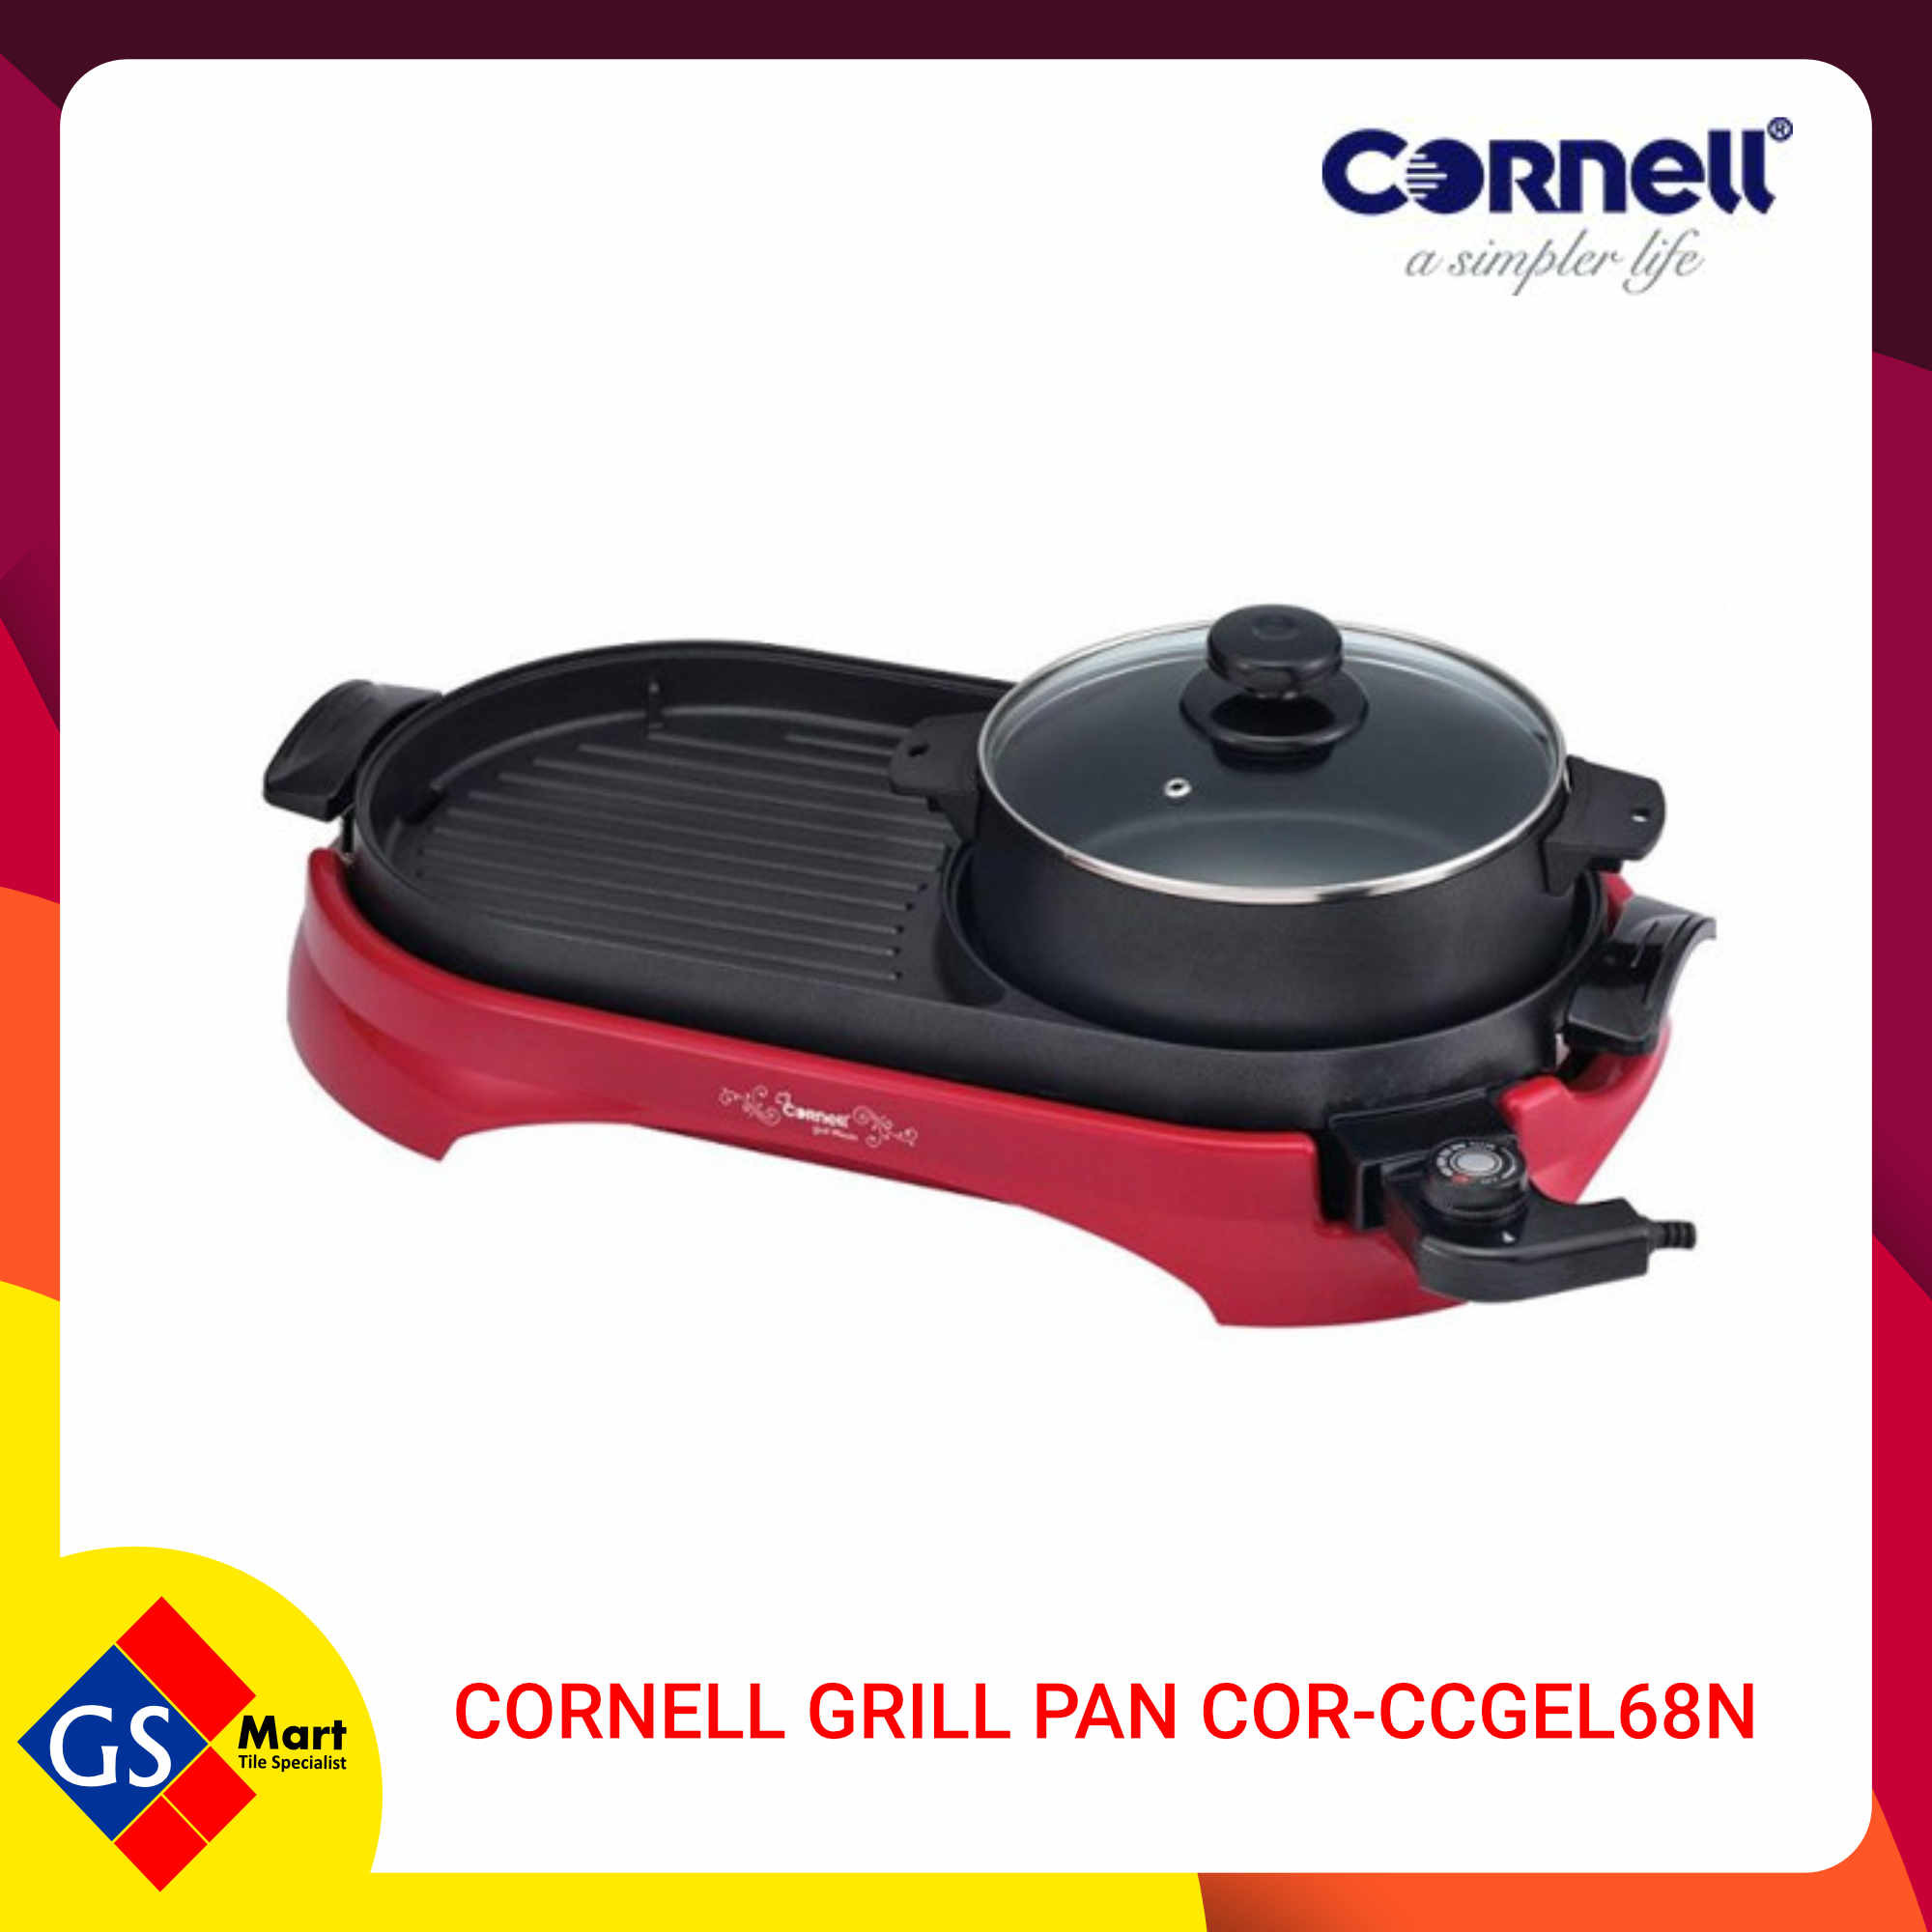 CORNELL Grill Pan COR-CCGEL68N